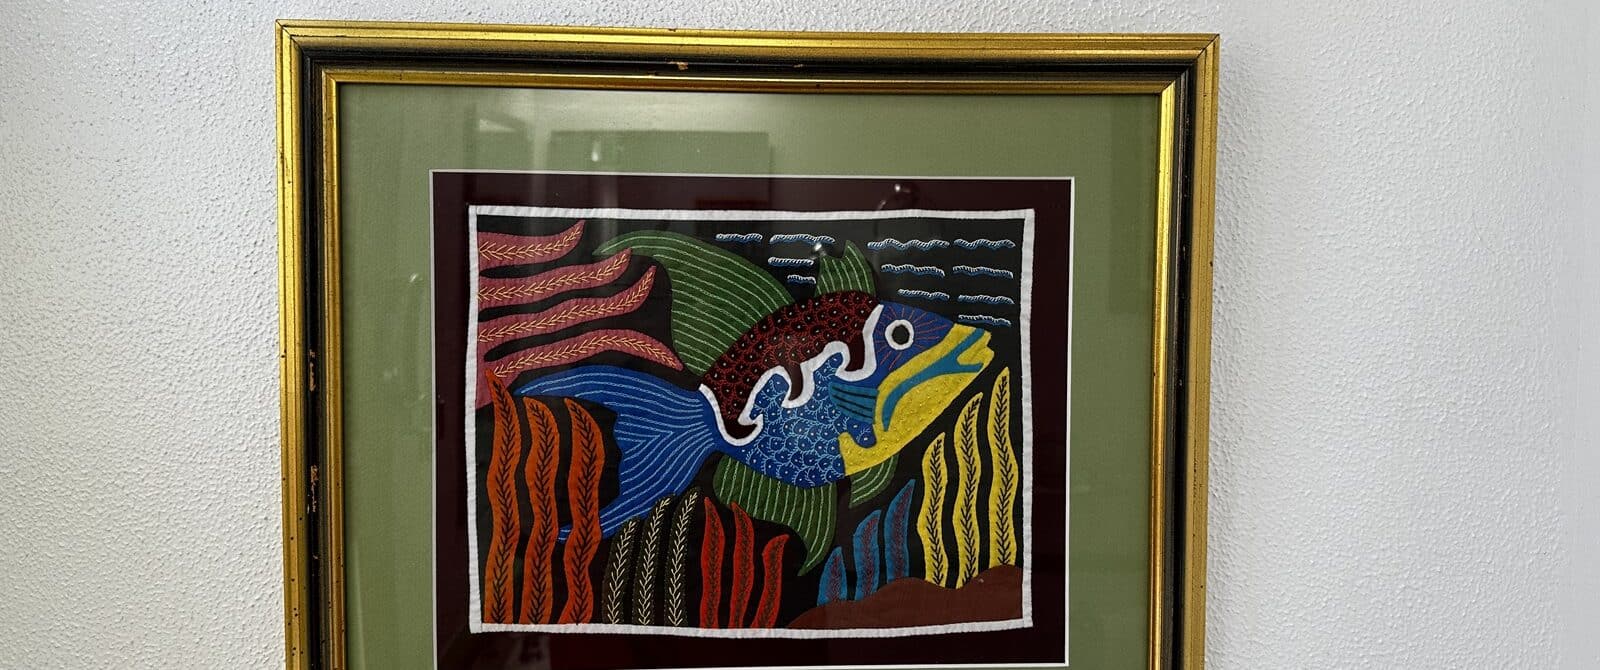 Mola art of a fish